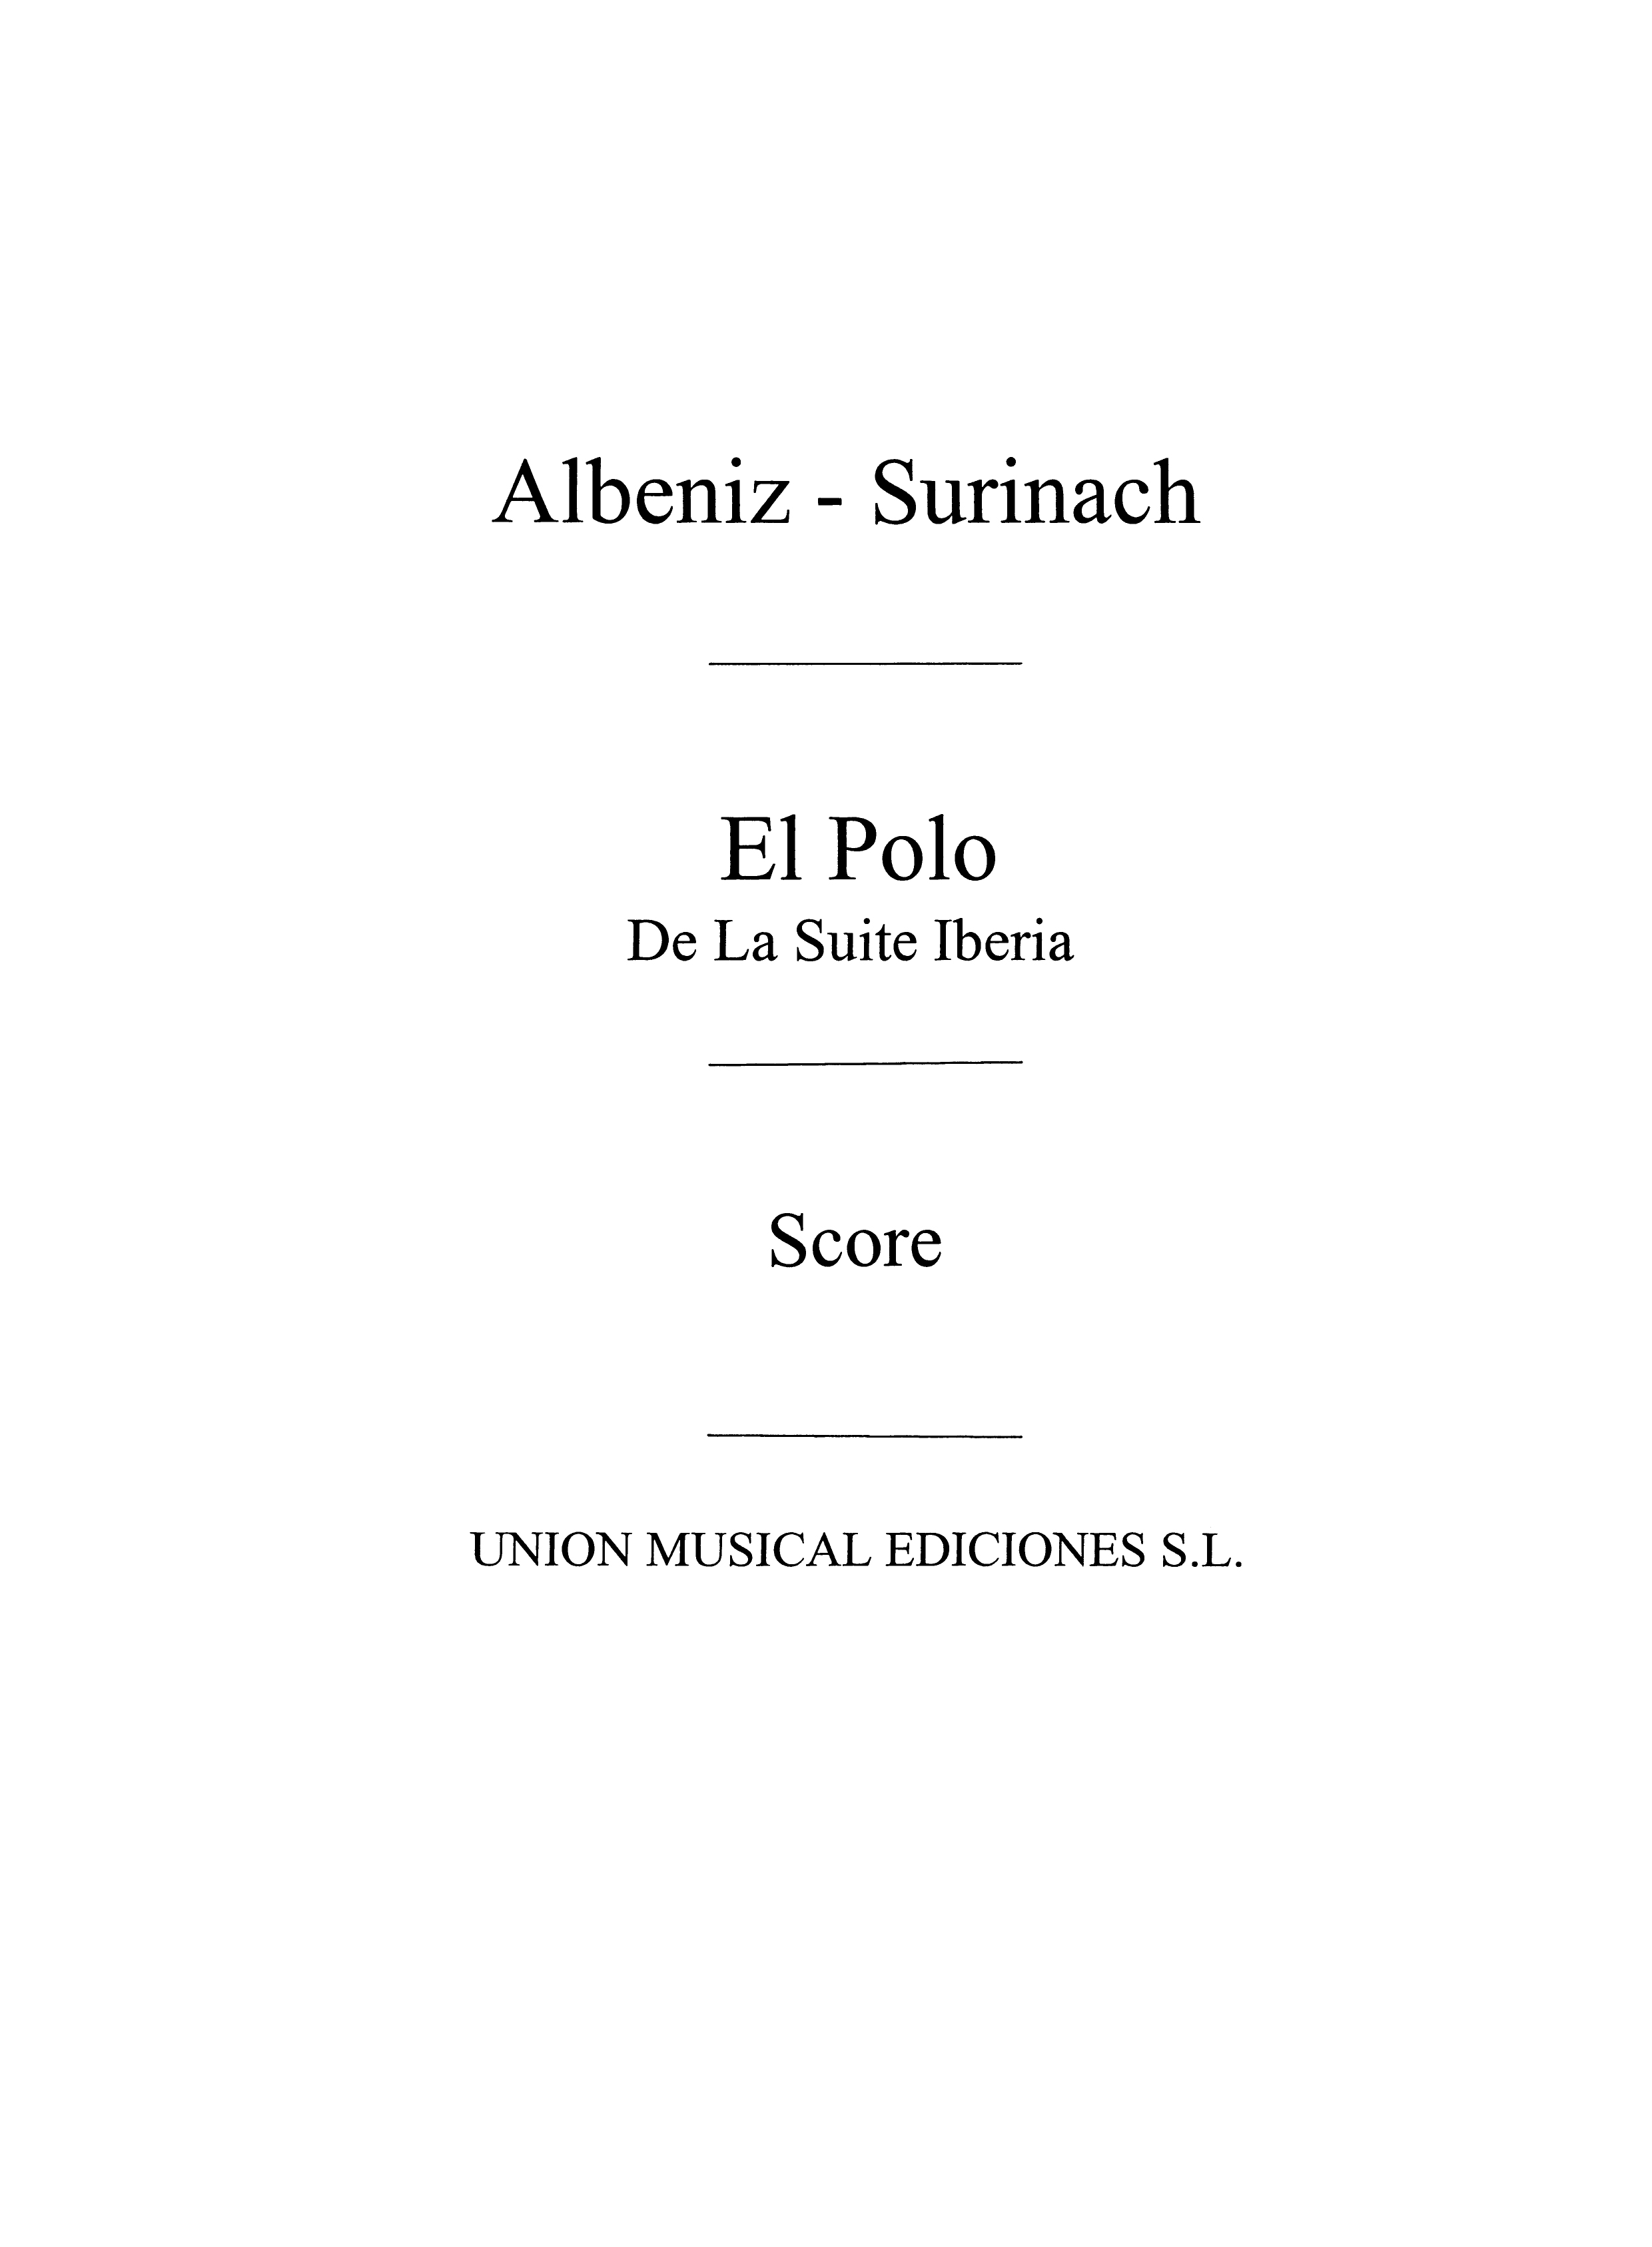 Albeniz: El Polo from Iberia (Surinach)